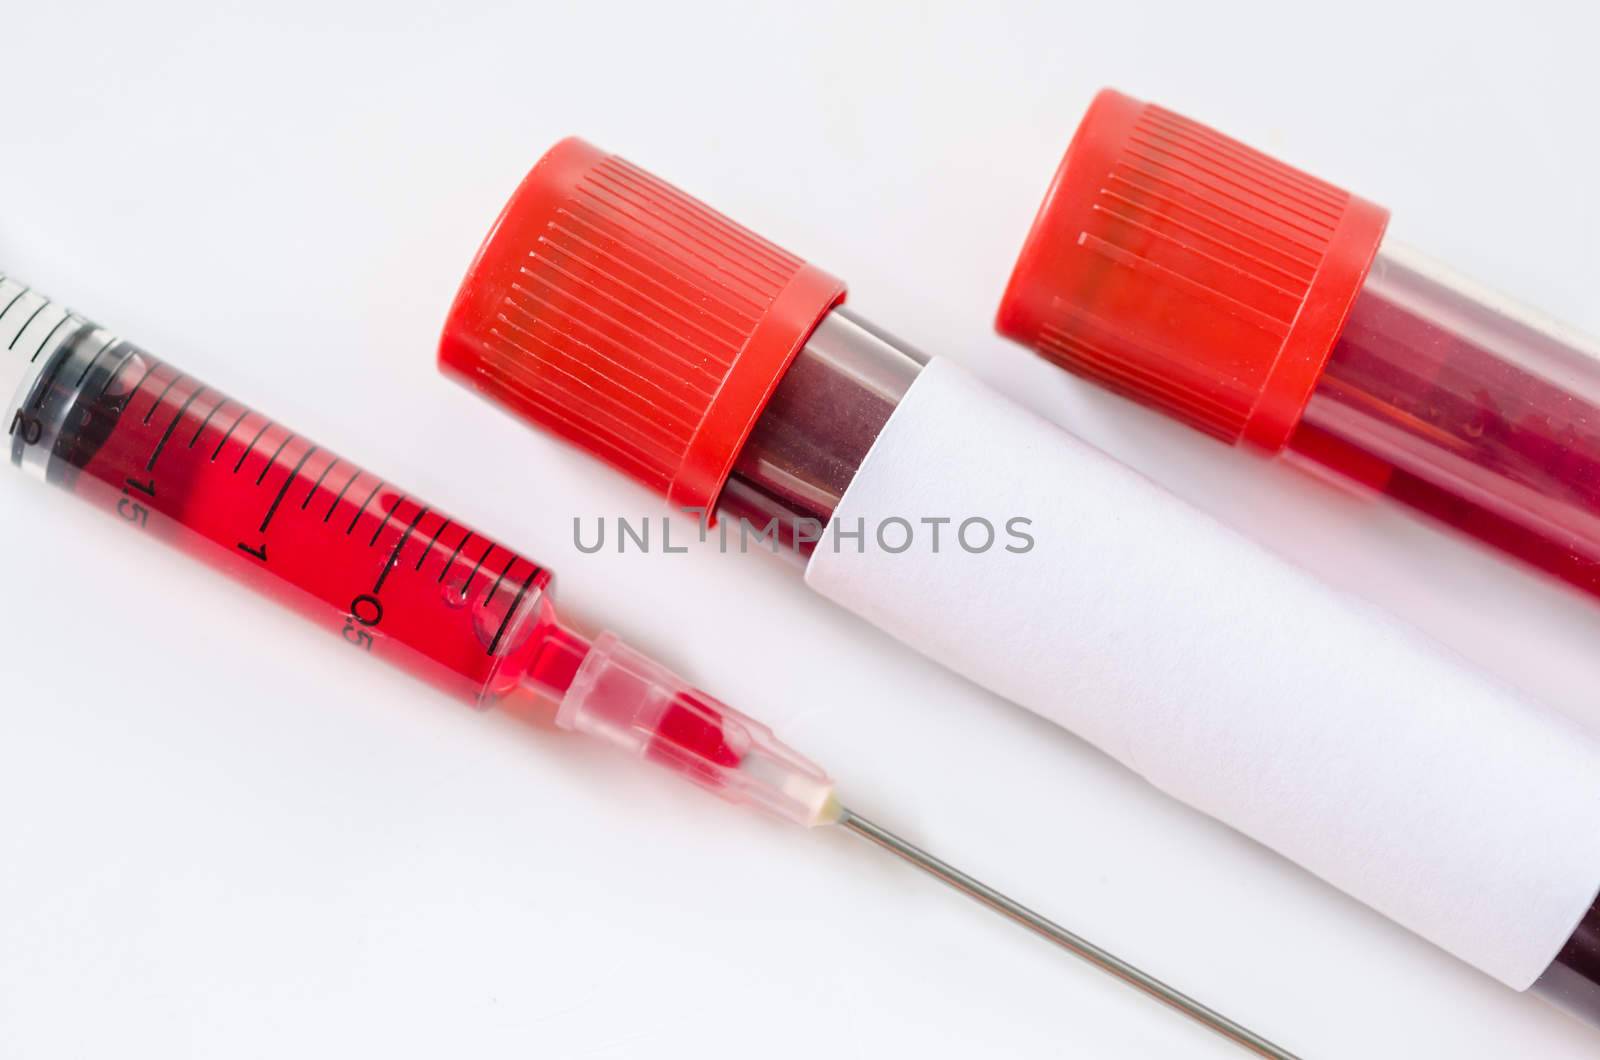 Syringe And Plastic Test Tube. by Gamjai